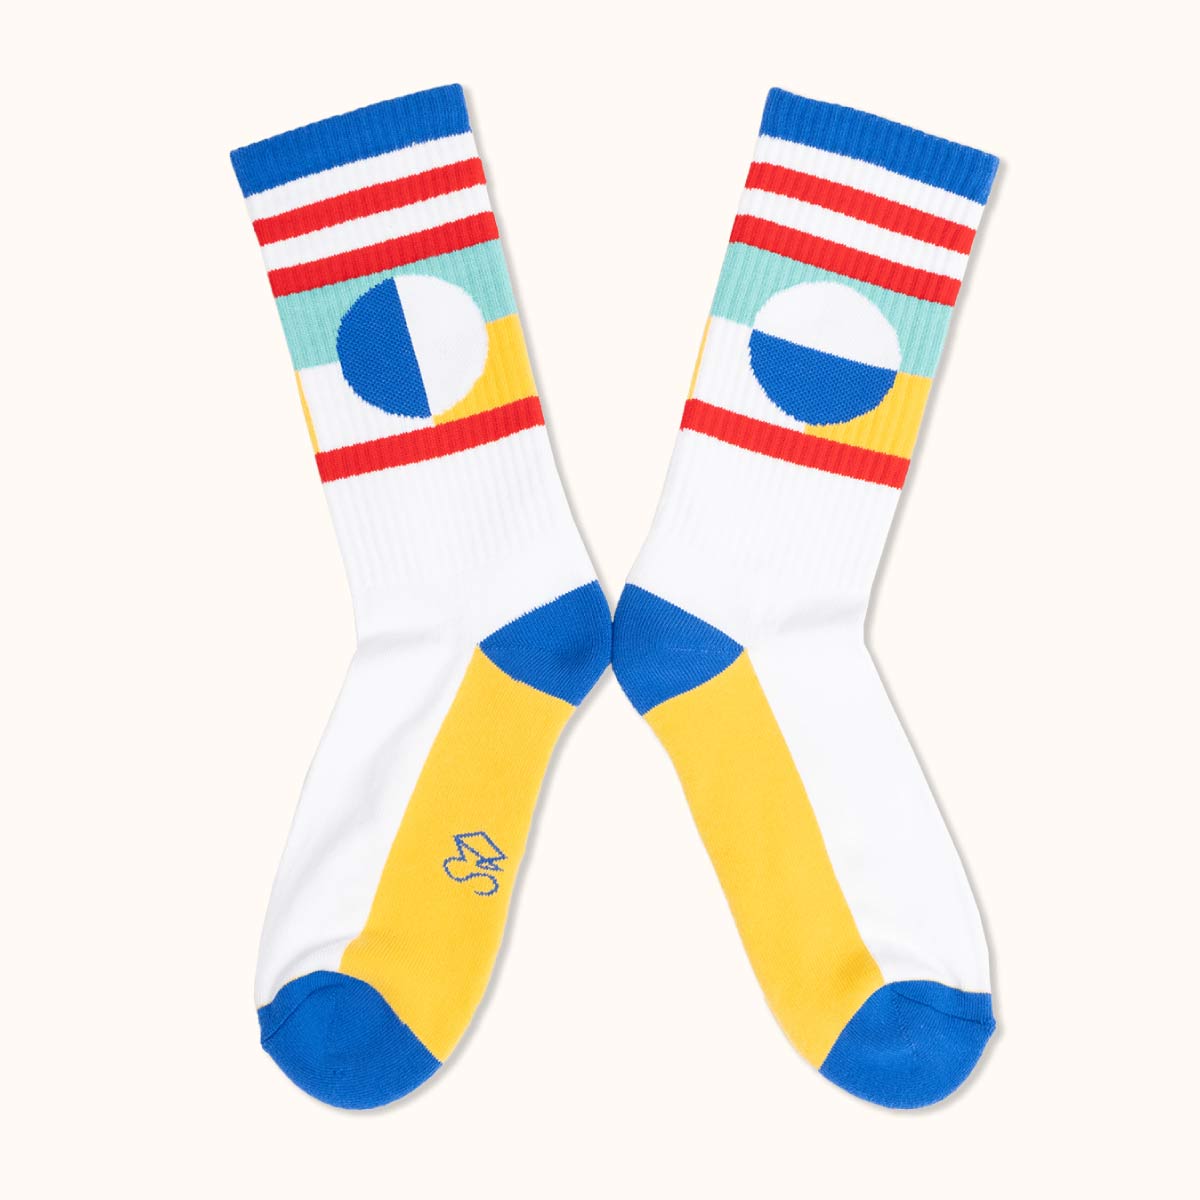 Socks Séverine Dietrich packshot yellow red blue and white